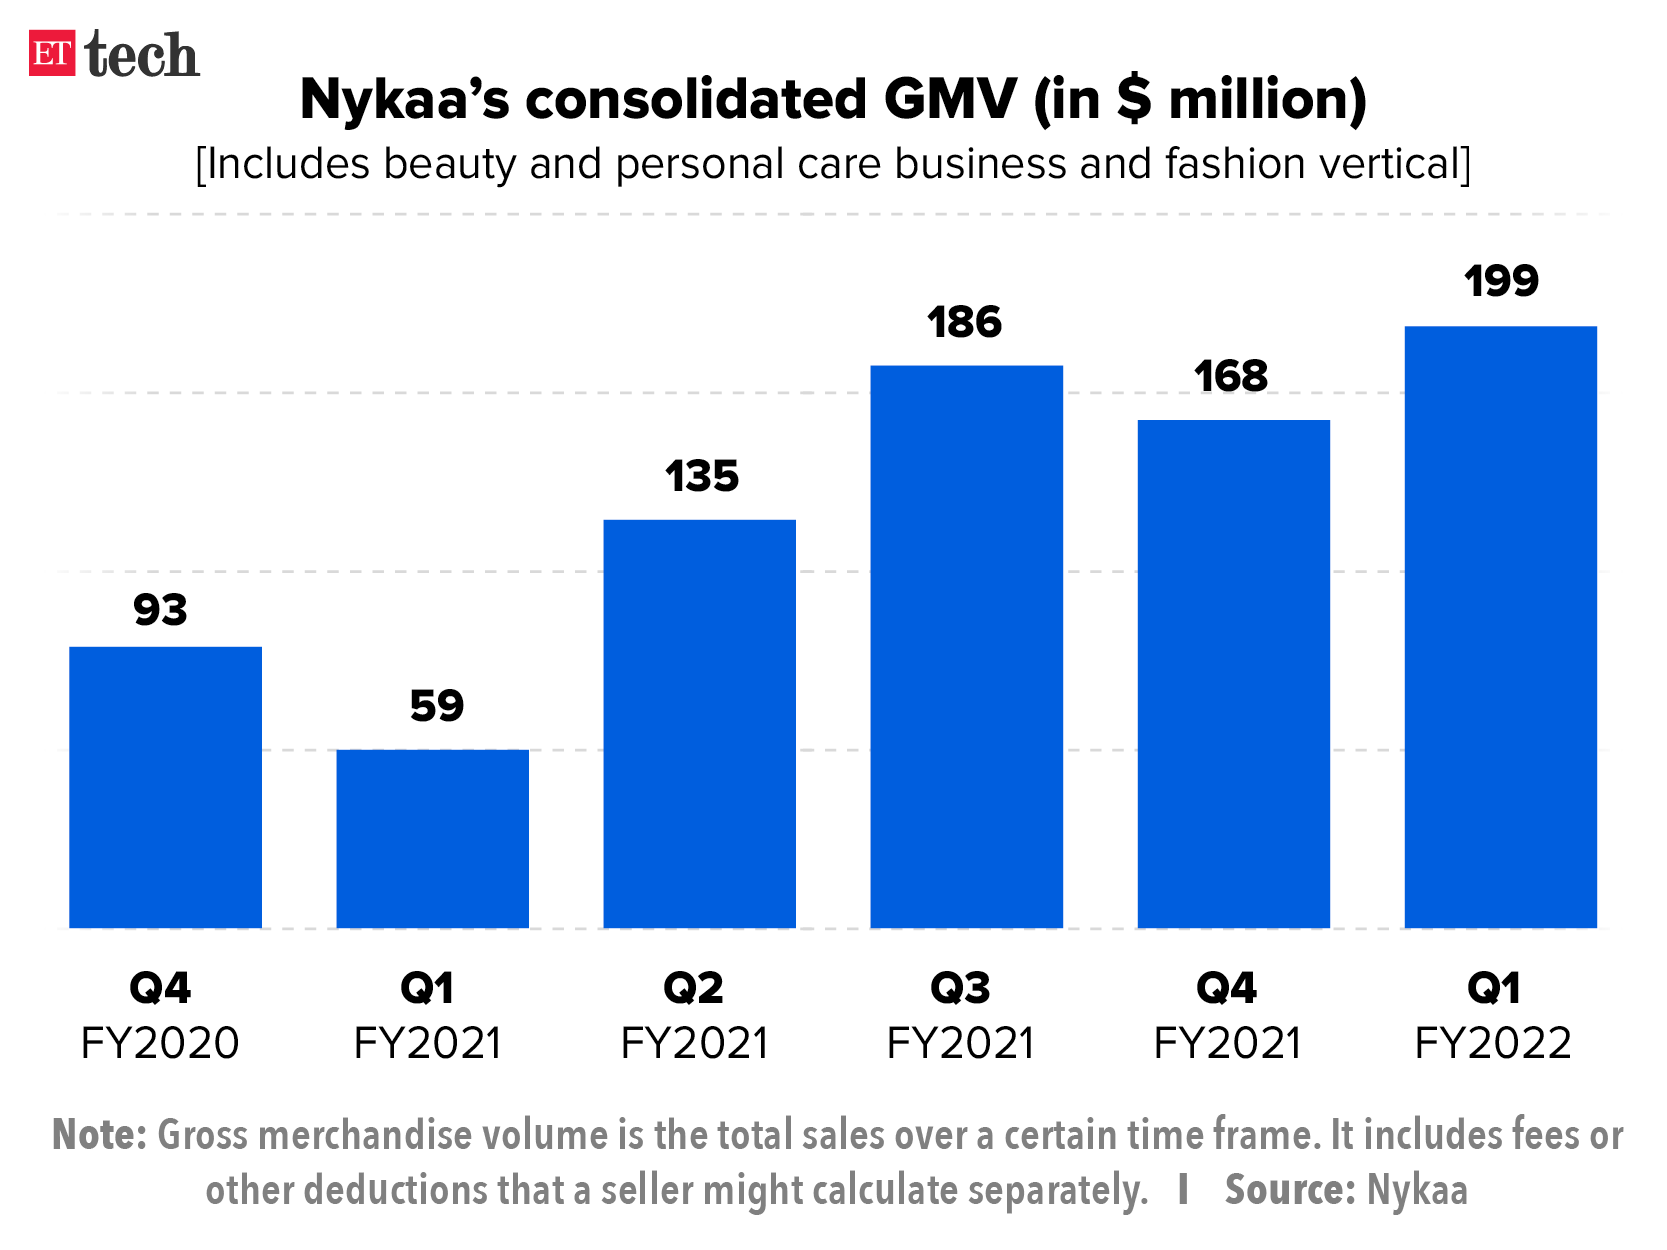 Nykaa consolidated GMV